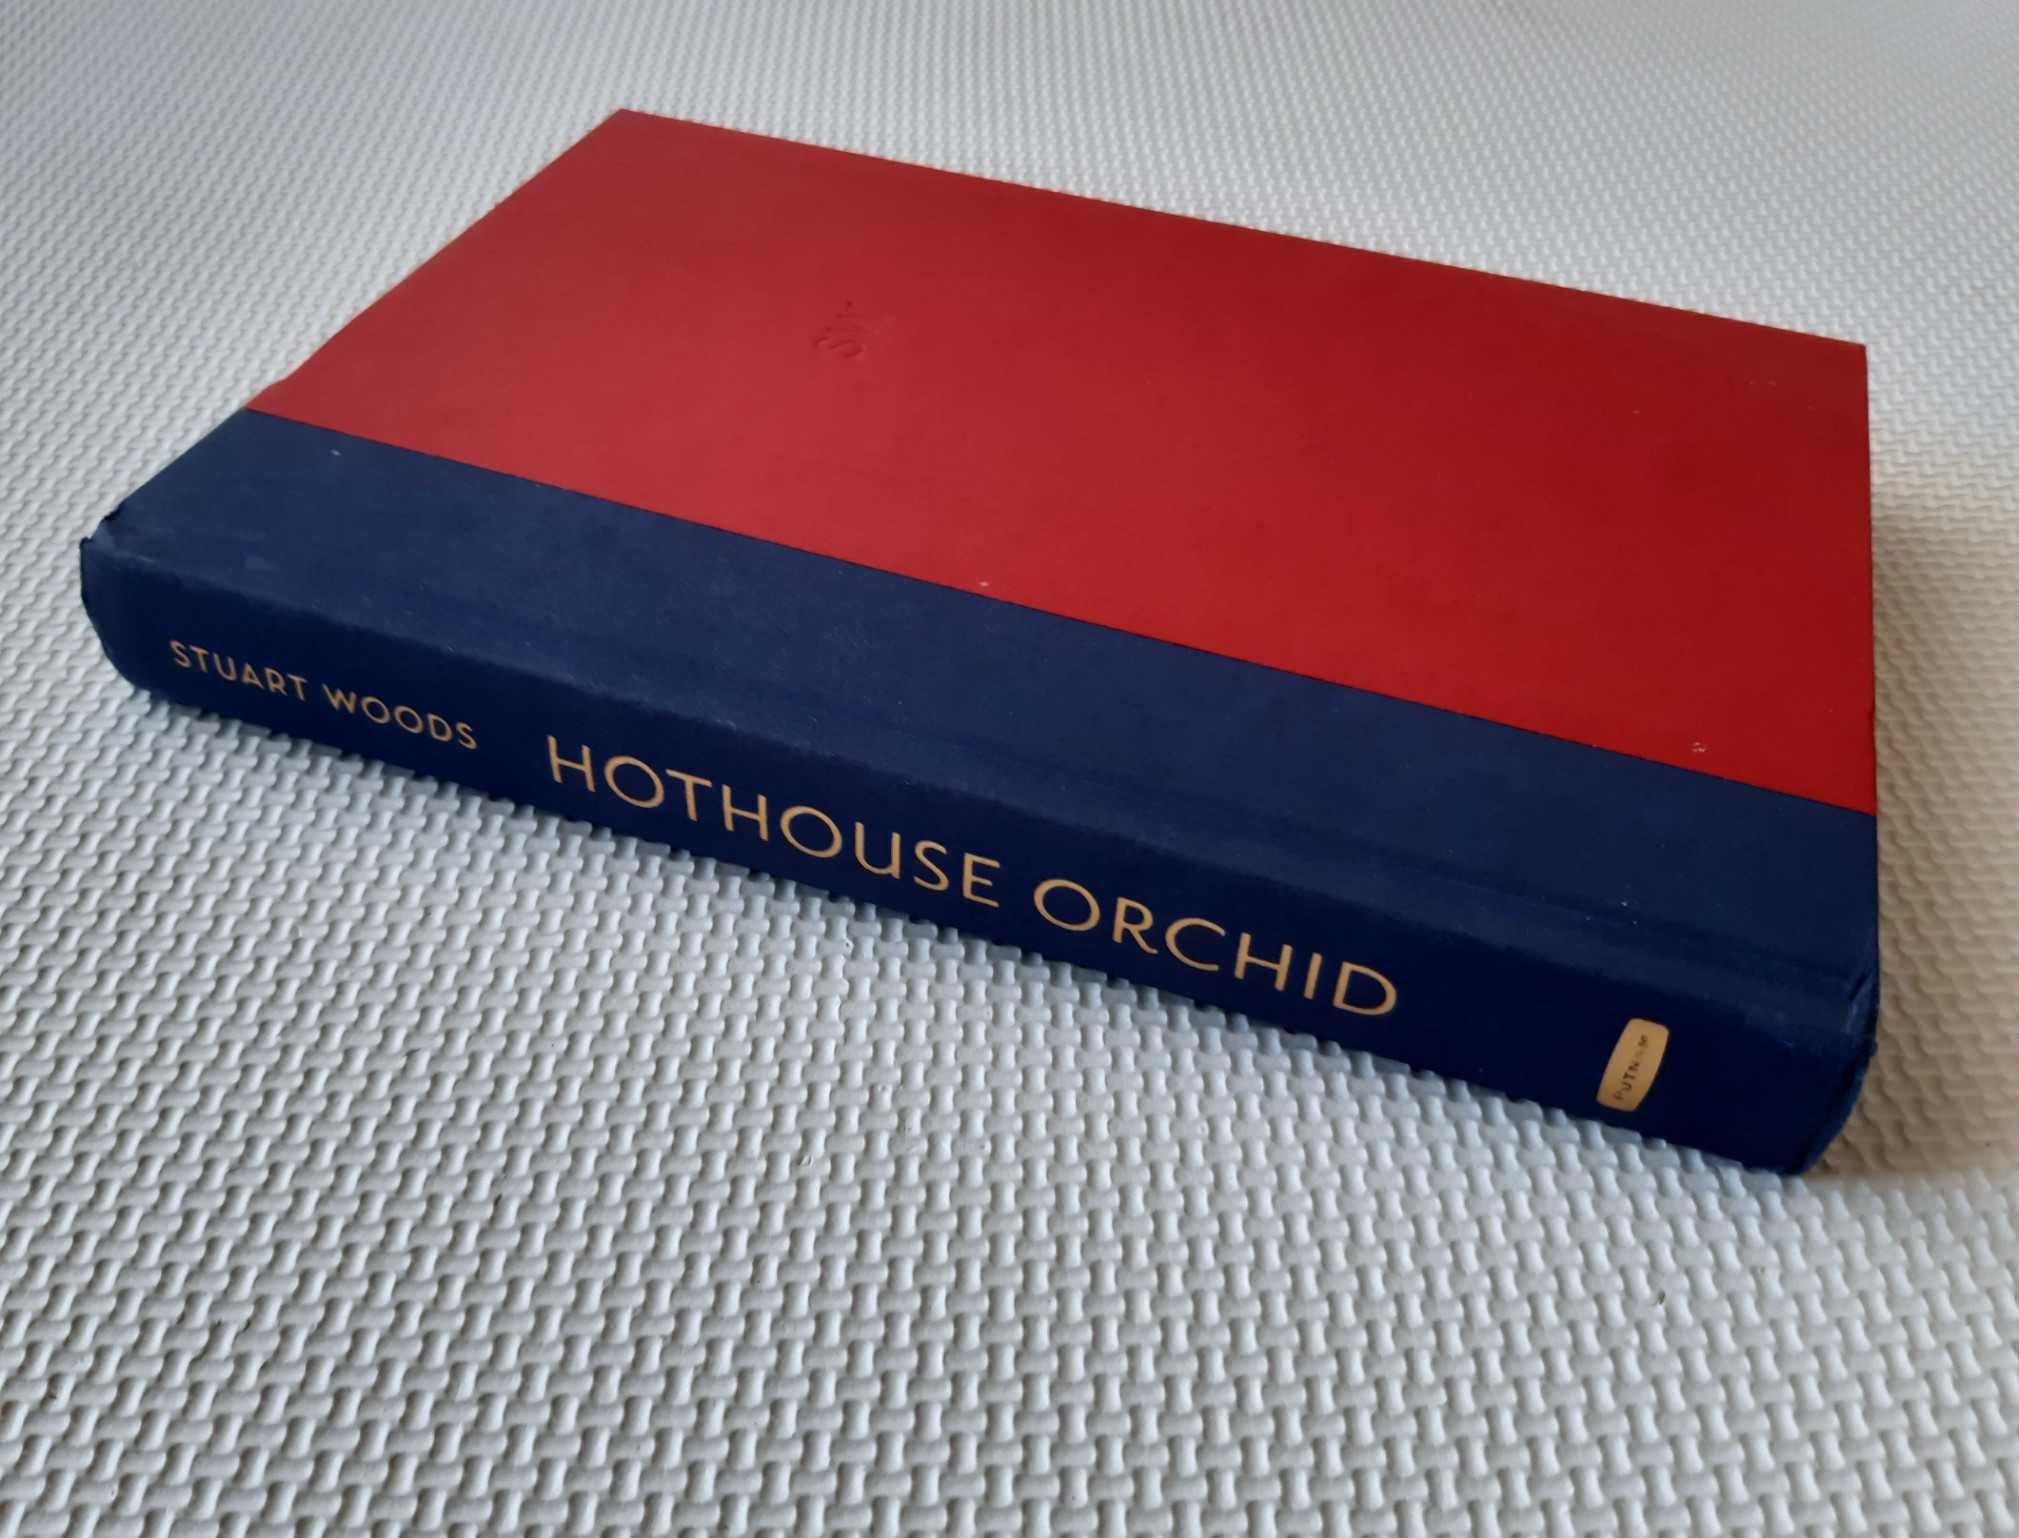 Hothouse Orchid Stuart Woods Twarda Oprawa English